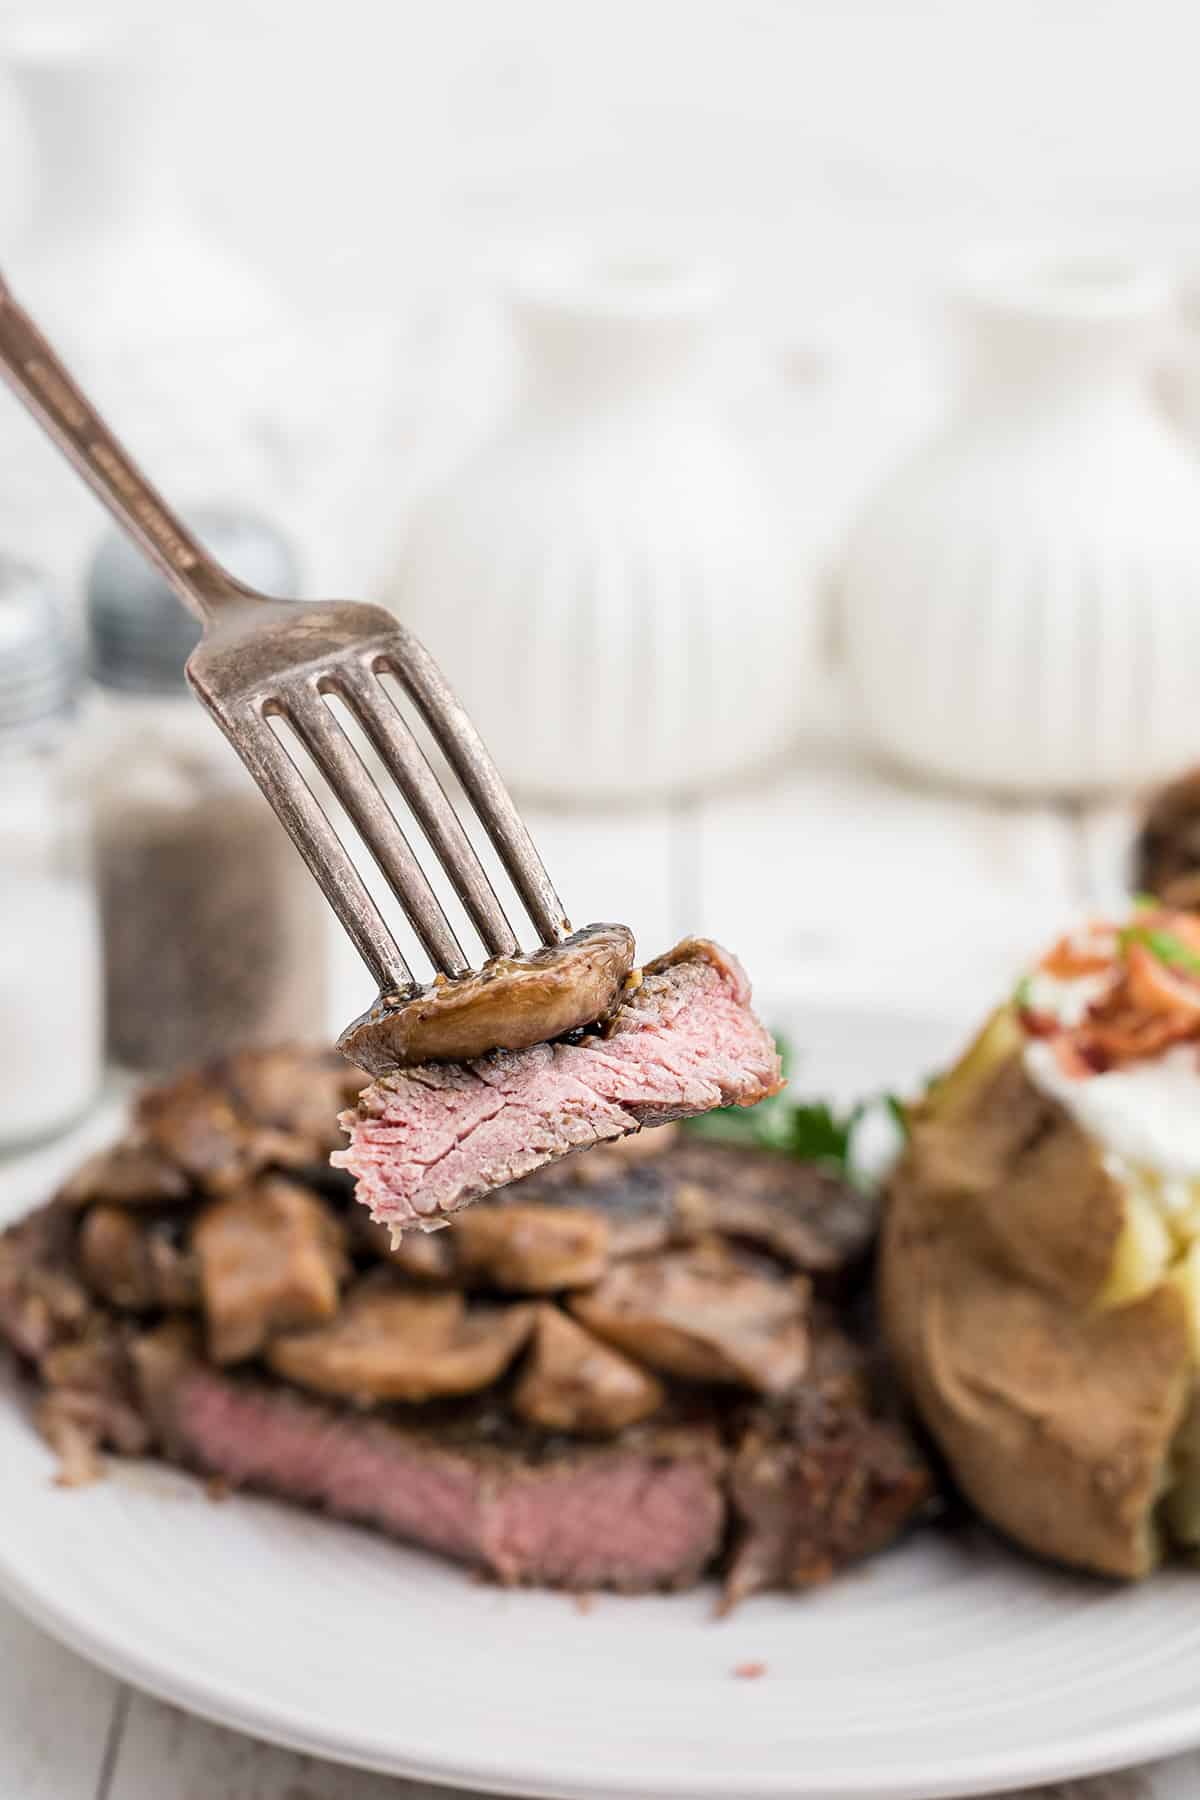 A bite of steak and mushroom on a fork.